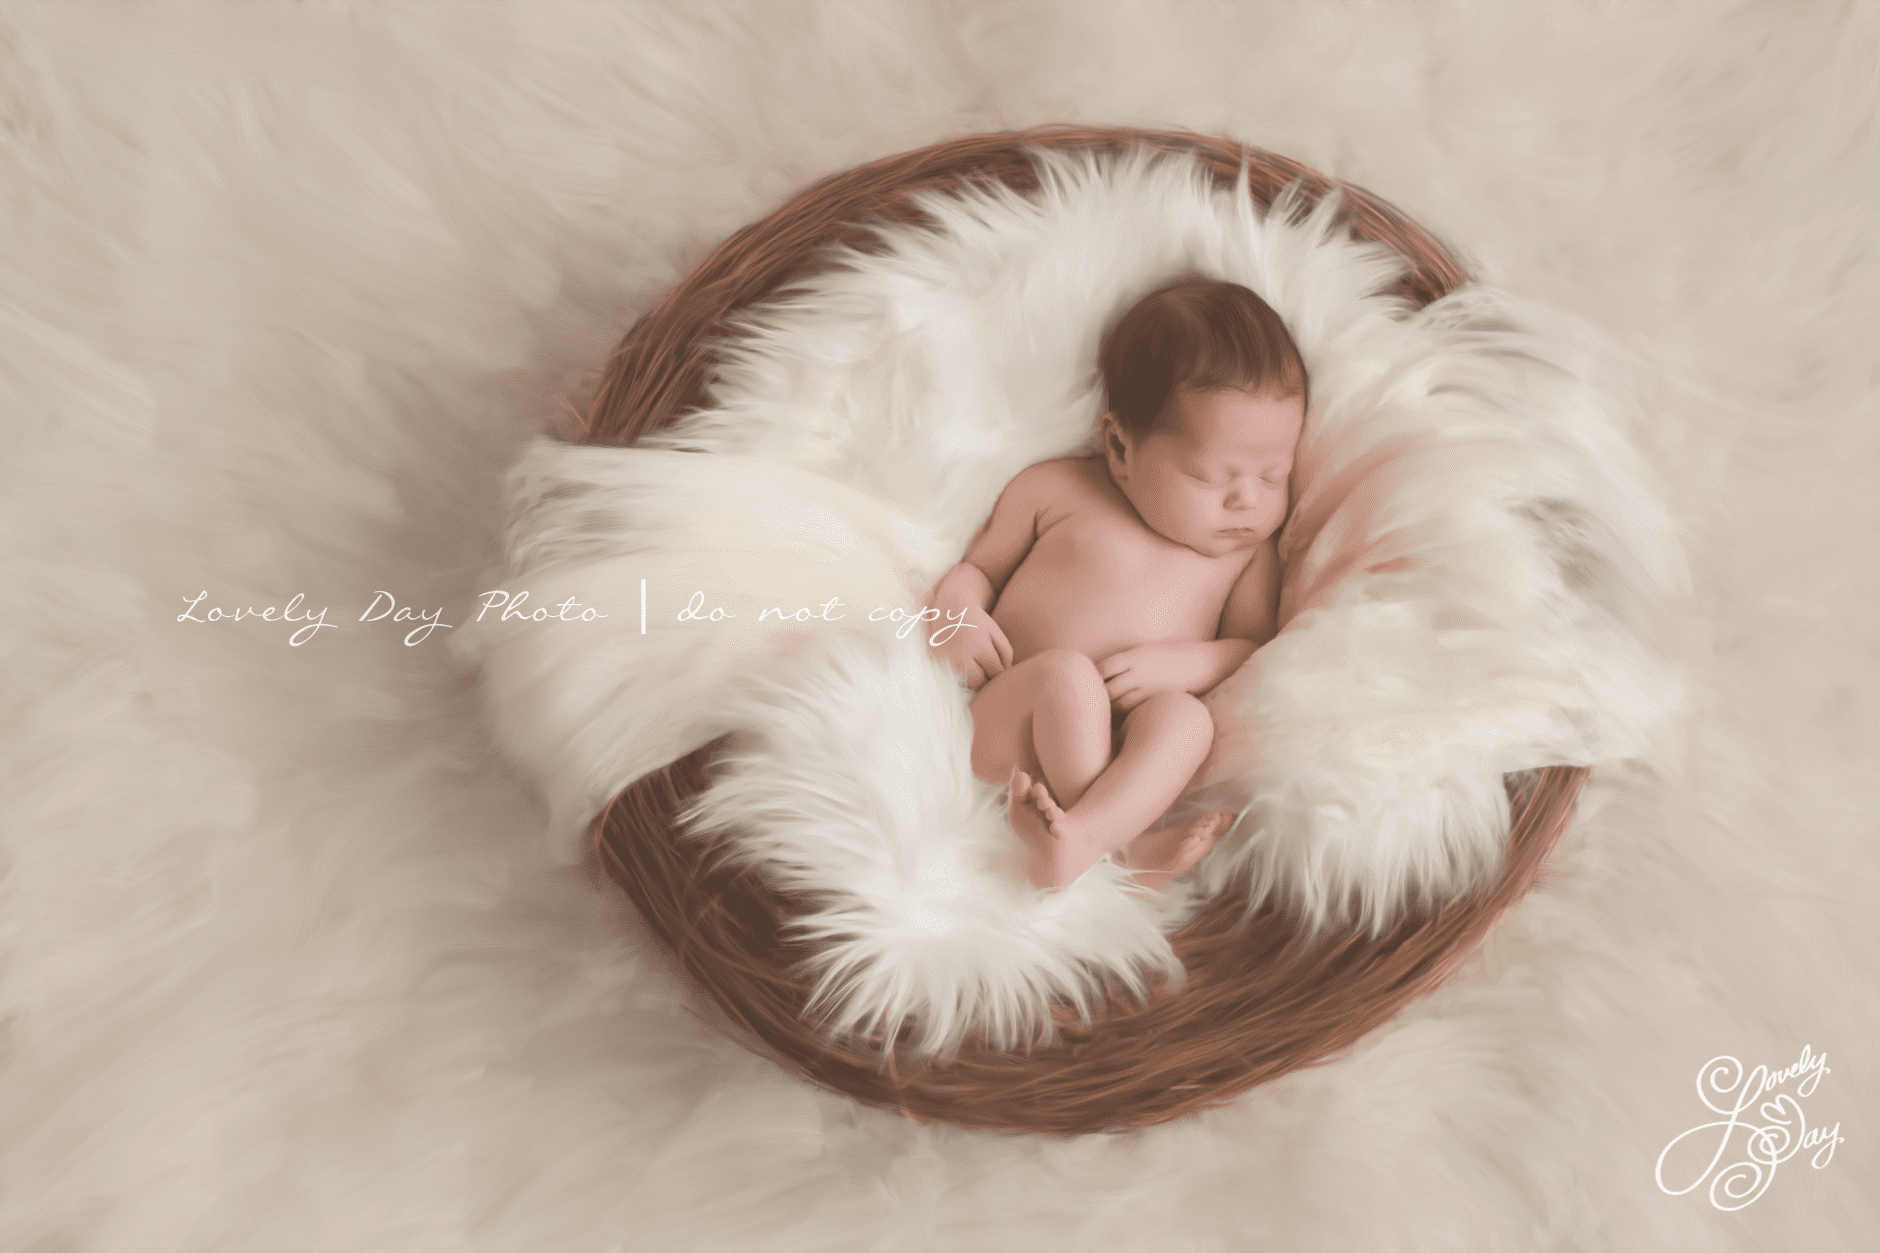 Lovely Day Photo - Newborn Portrait